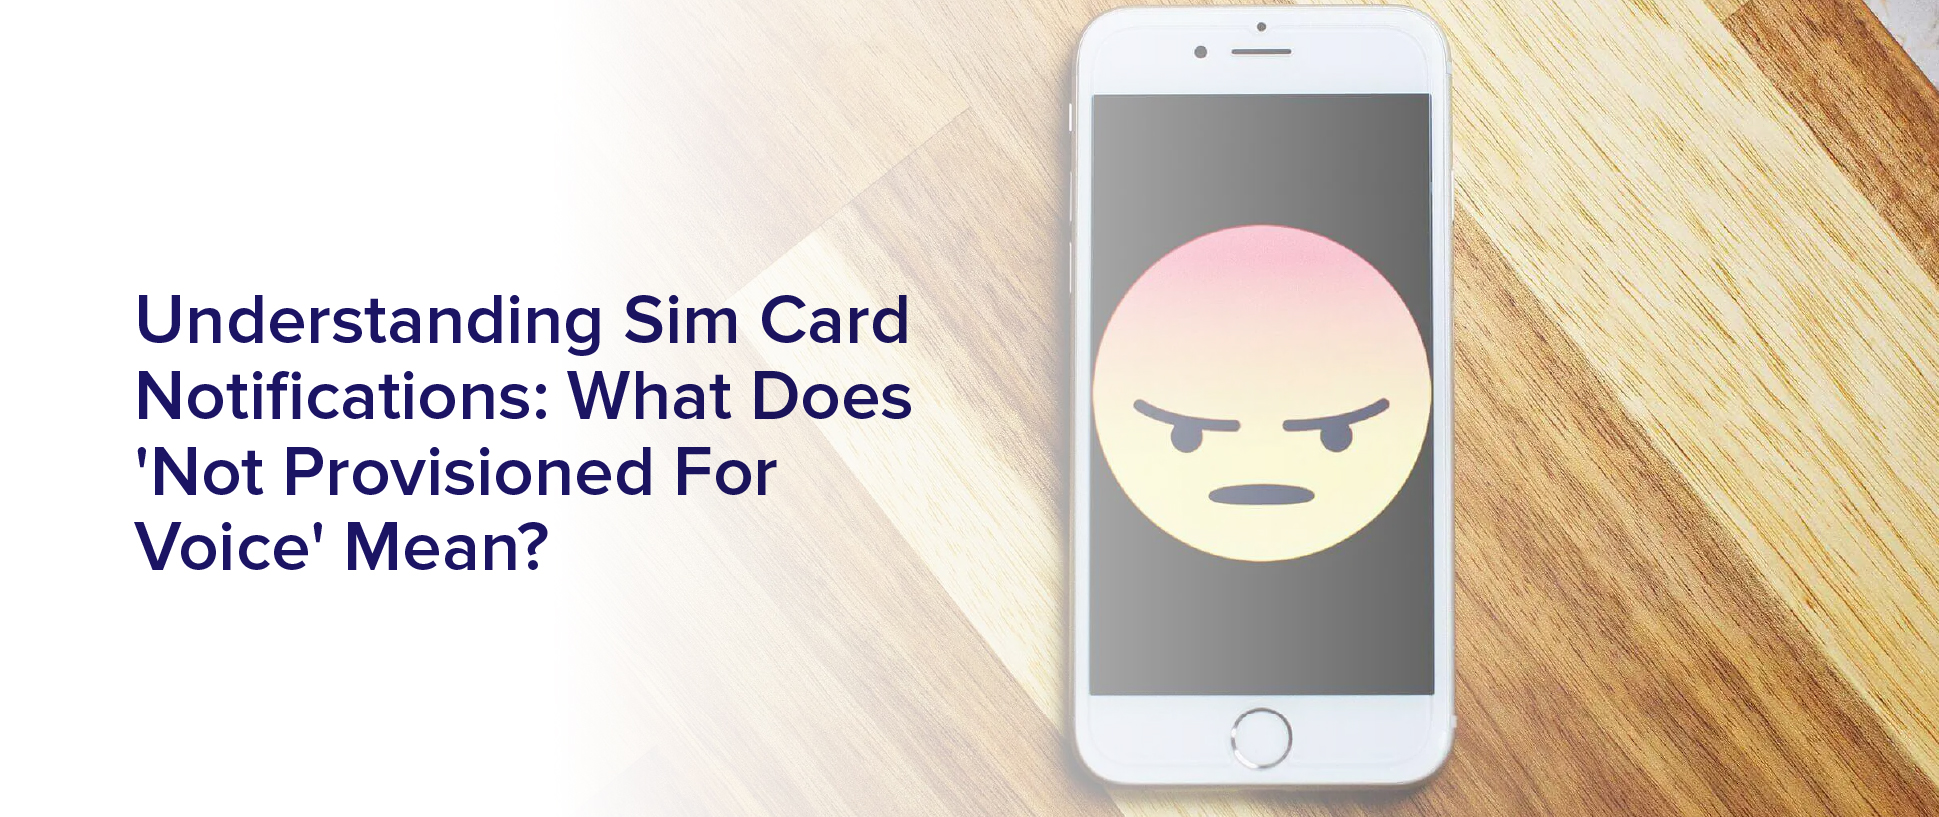 Understanding Sim Card Notifications